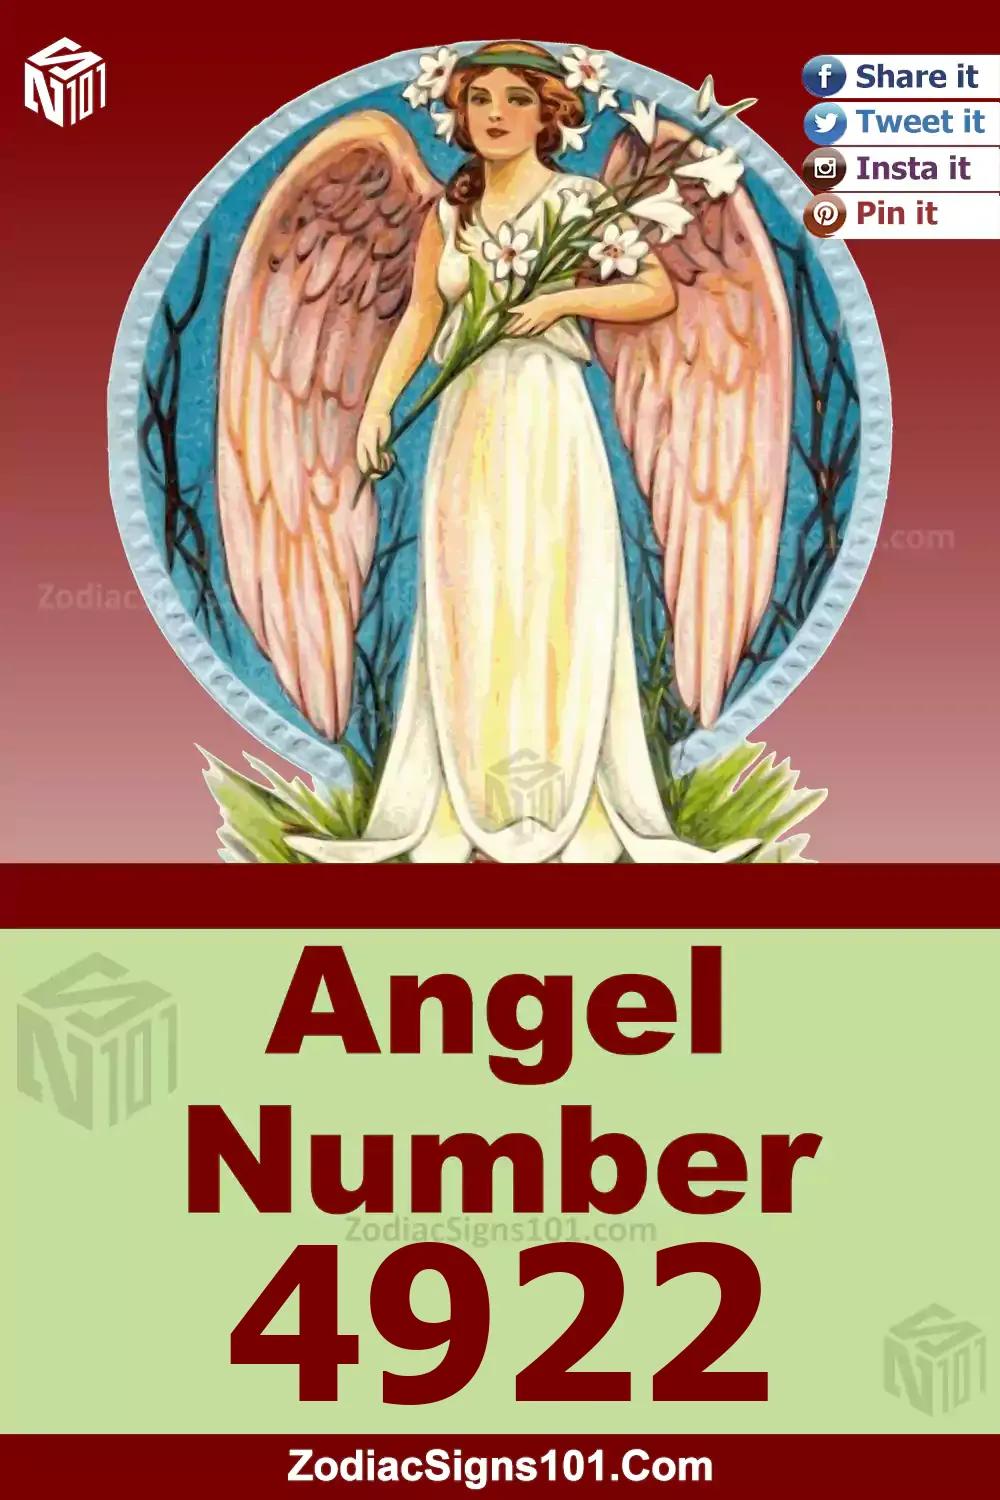 4922-Angel-Number-Meaning.jpg